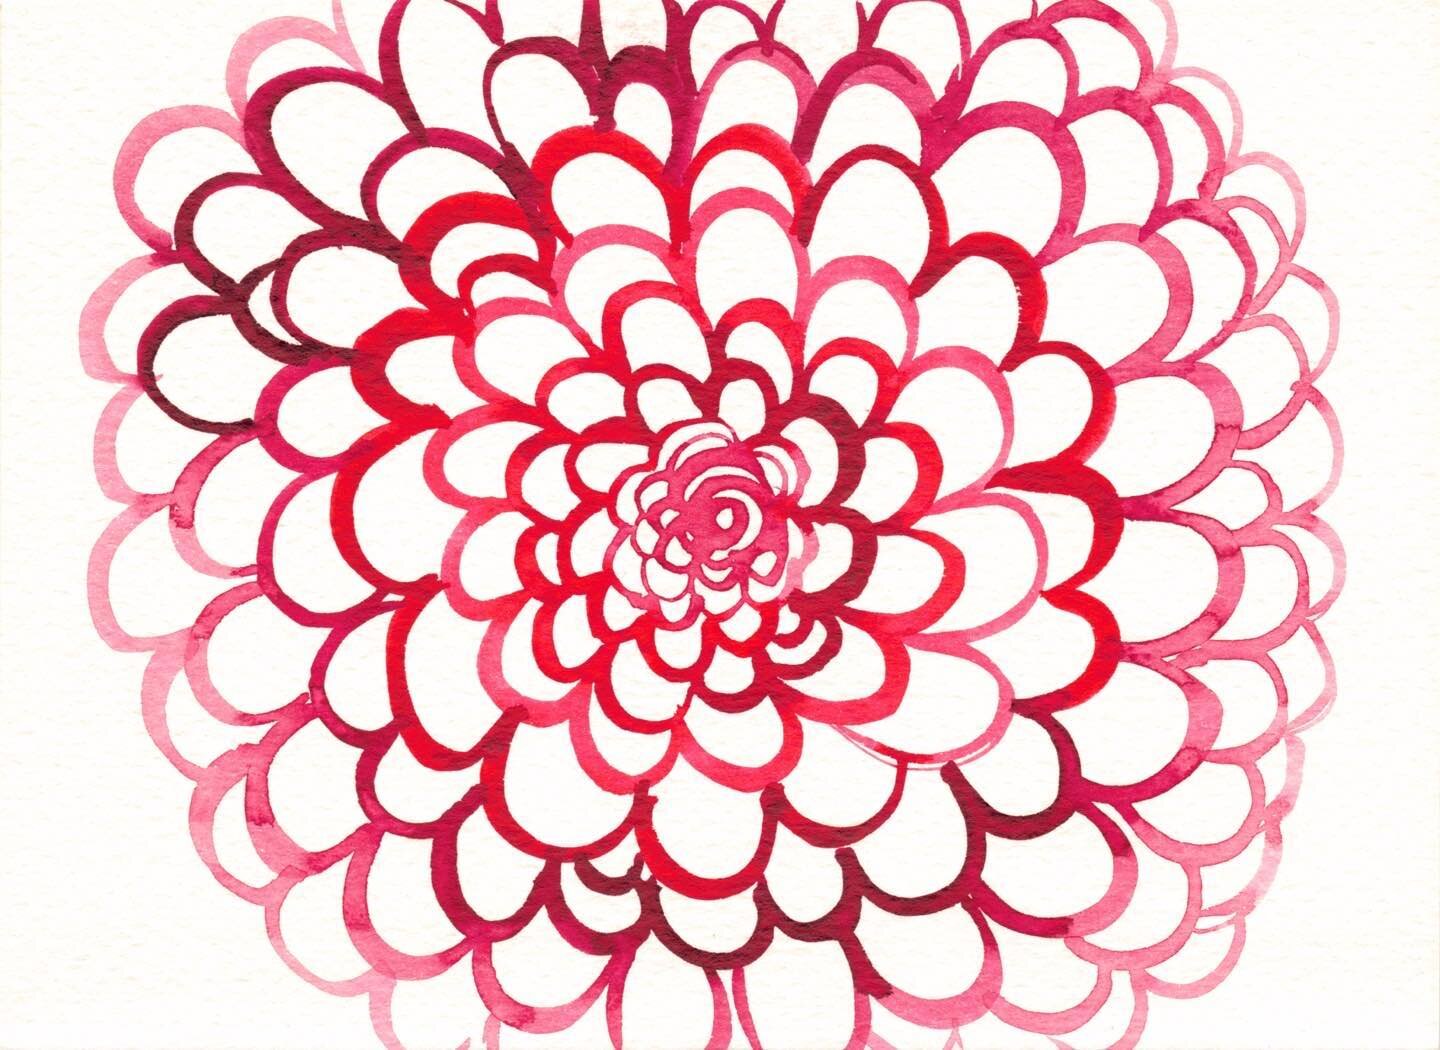 Happy Valentine&rsquo;s Day! 

#zinnia #watercolor #arosebyanyothername #loveisintheair #pink #handmadevalentines #mailingvalentines #paintingflowers #roundandround #klythefly